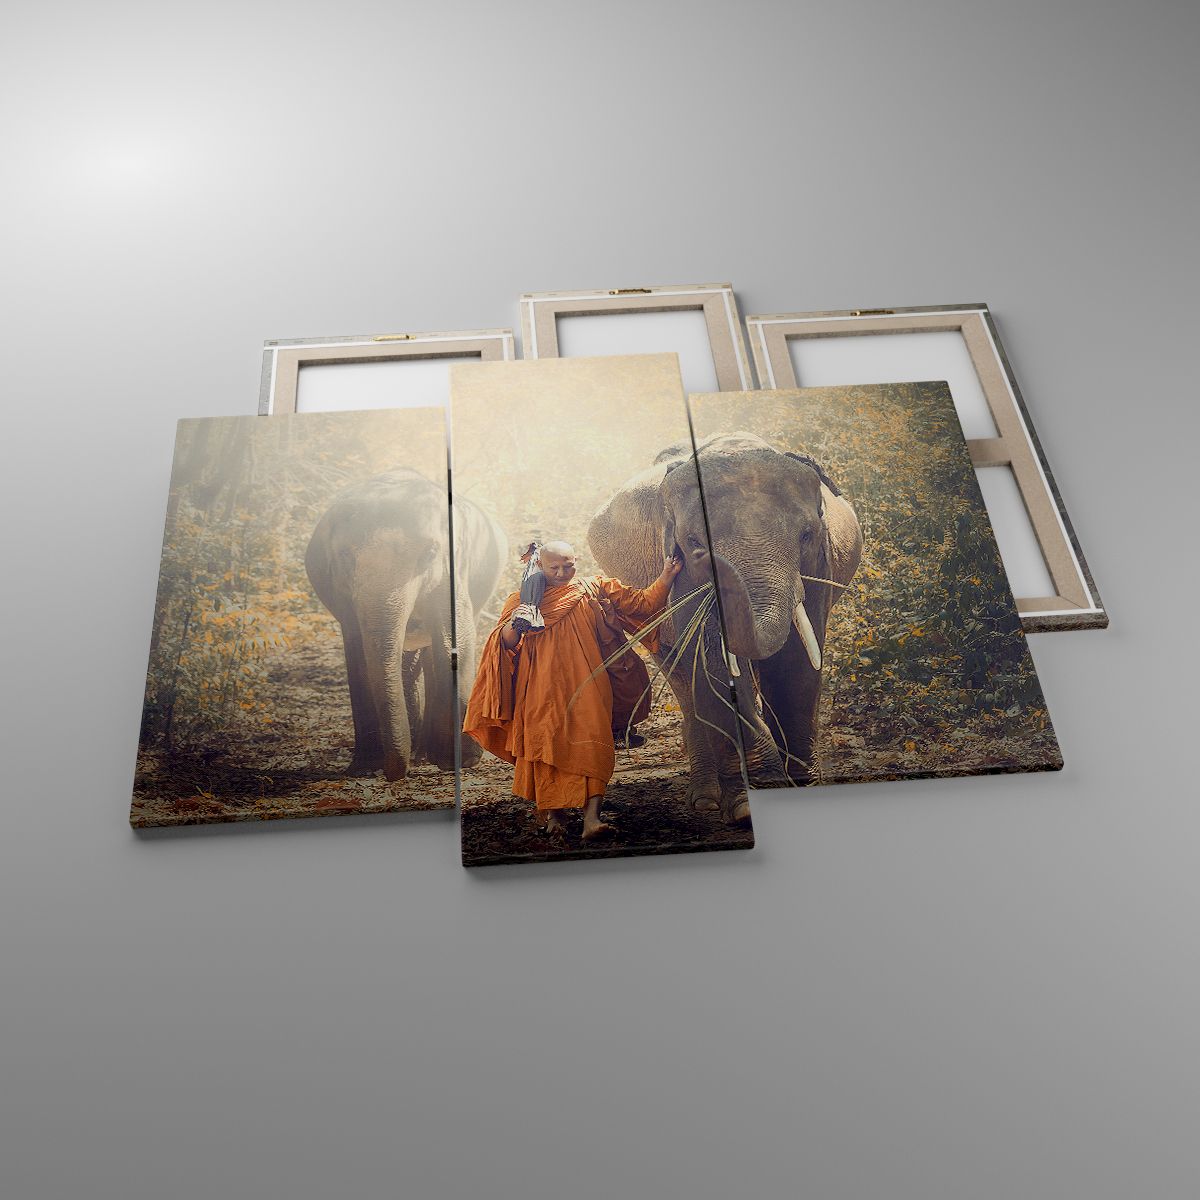 Obrazy Azja, Obrazy Słoń, Obrazy Mnich, Obrazy Dżungla, Obrazy Buddyzm